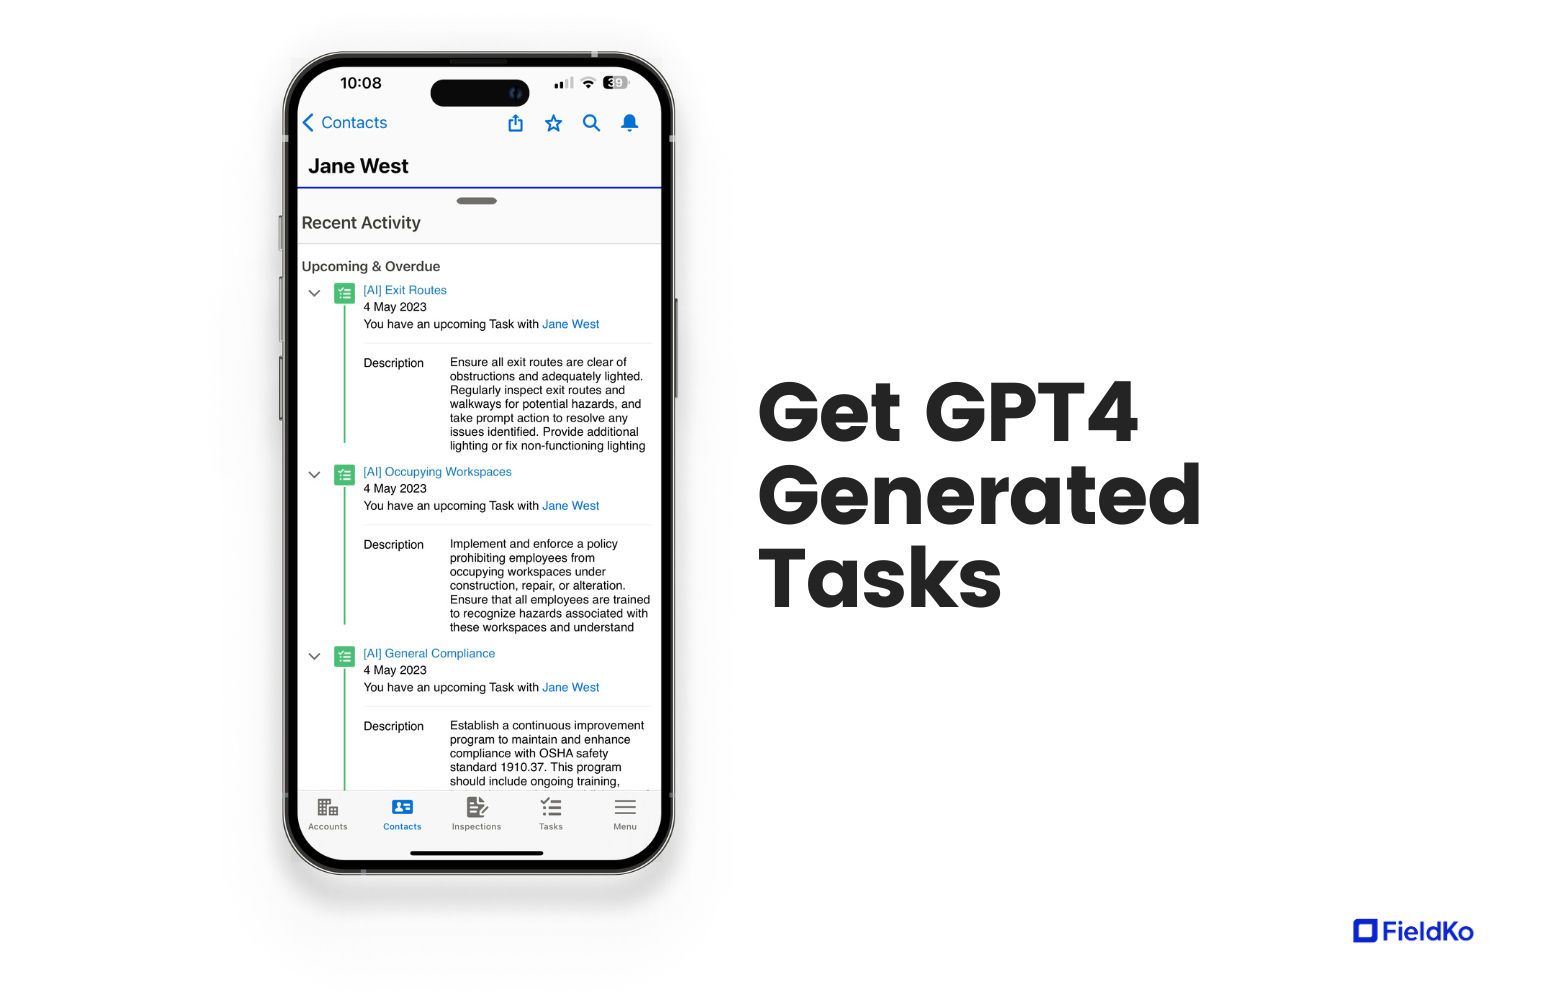 Get GPT4 Generated Tasks